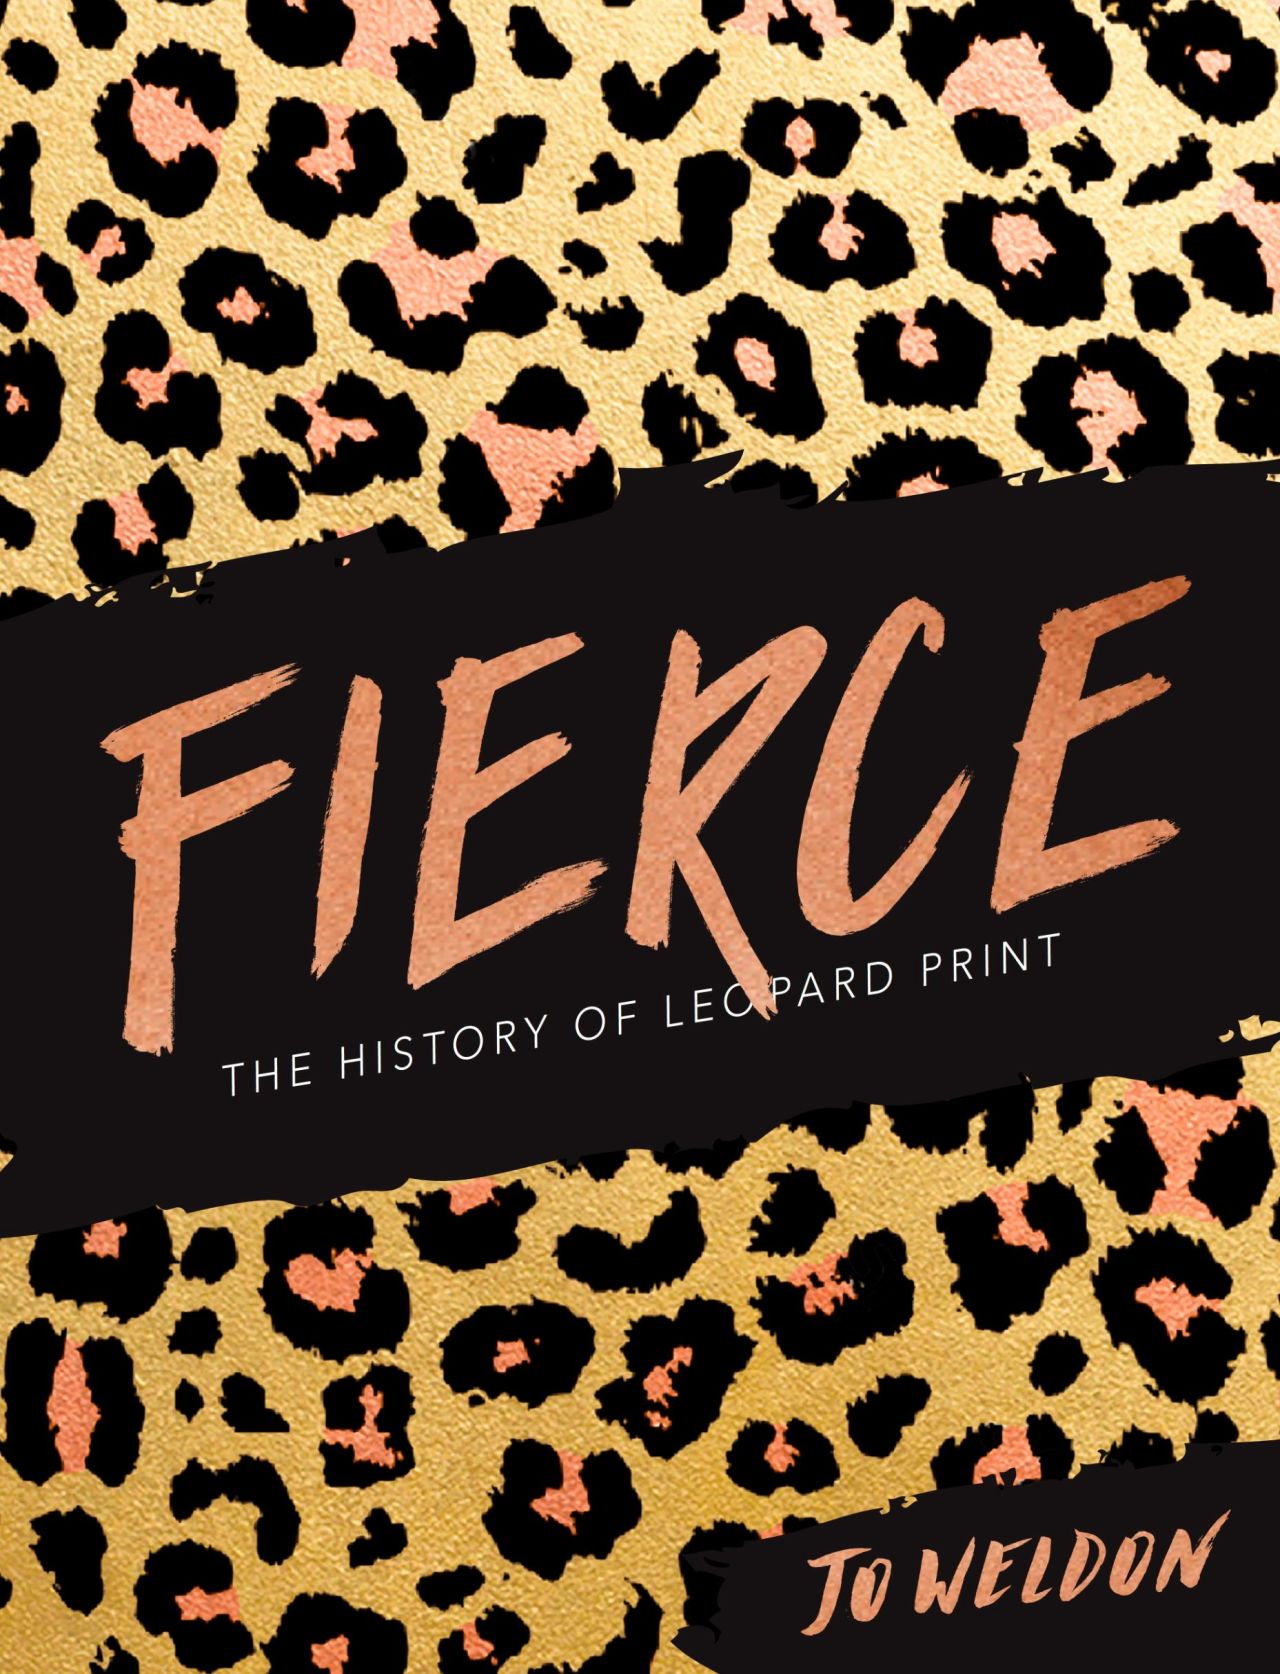 "Fierce: The History of Leopard Print" by Jo Weldon is available now. 